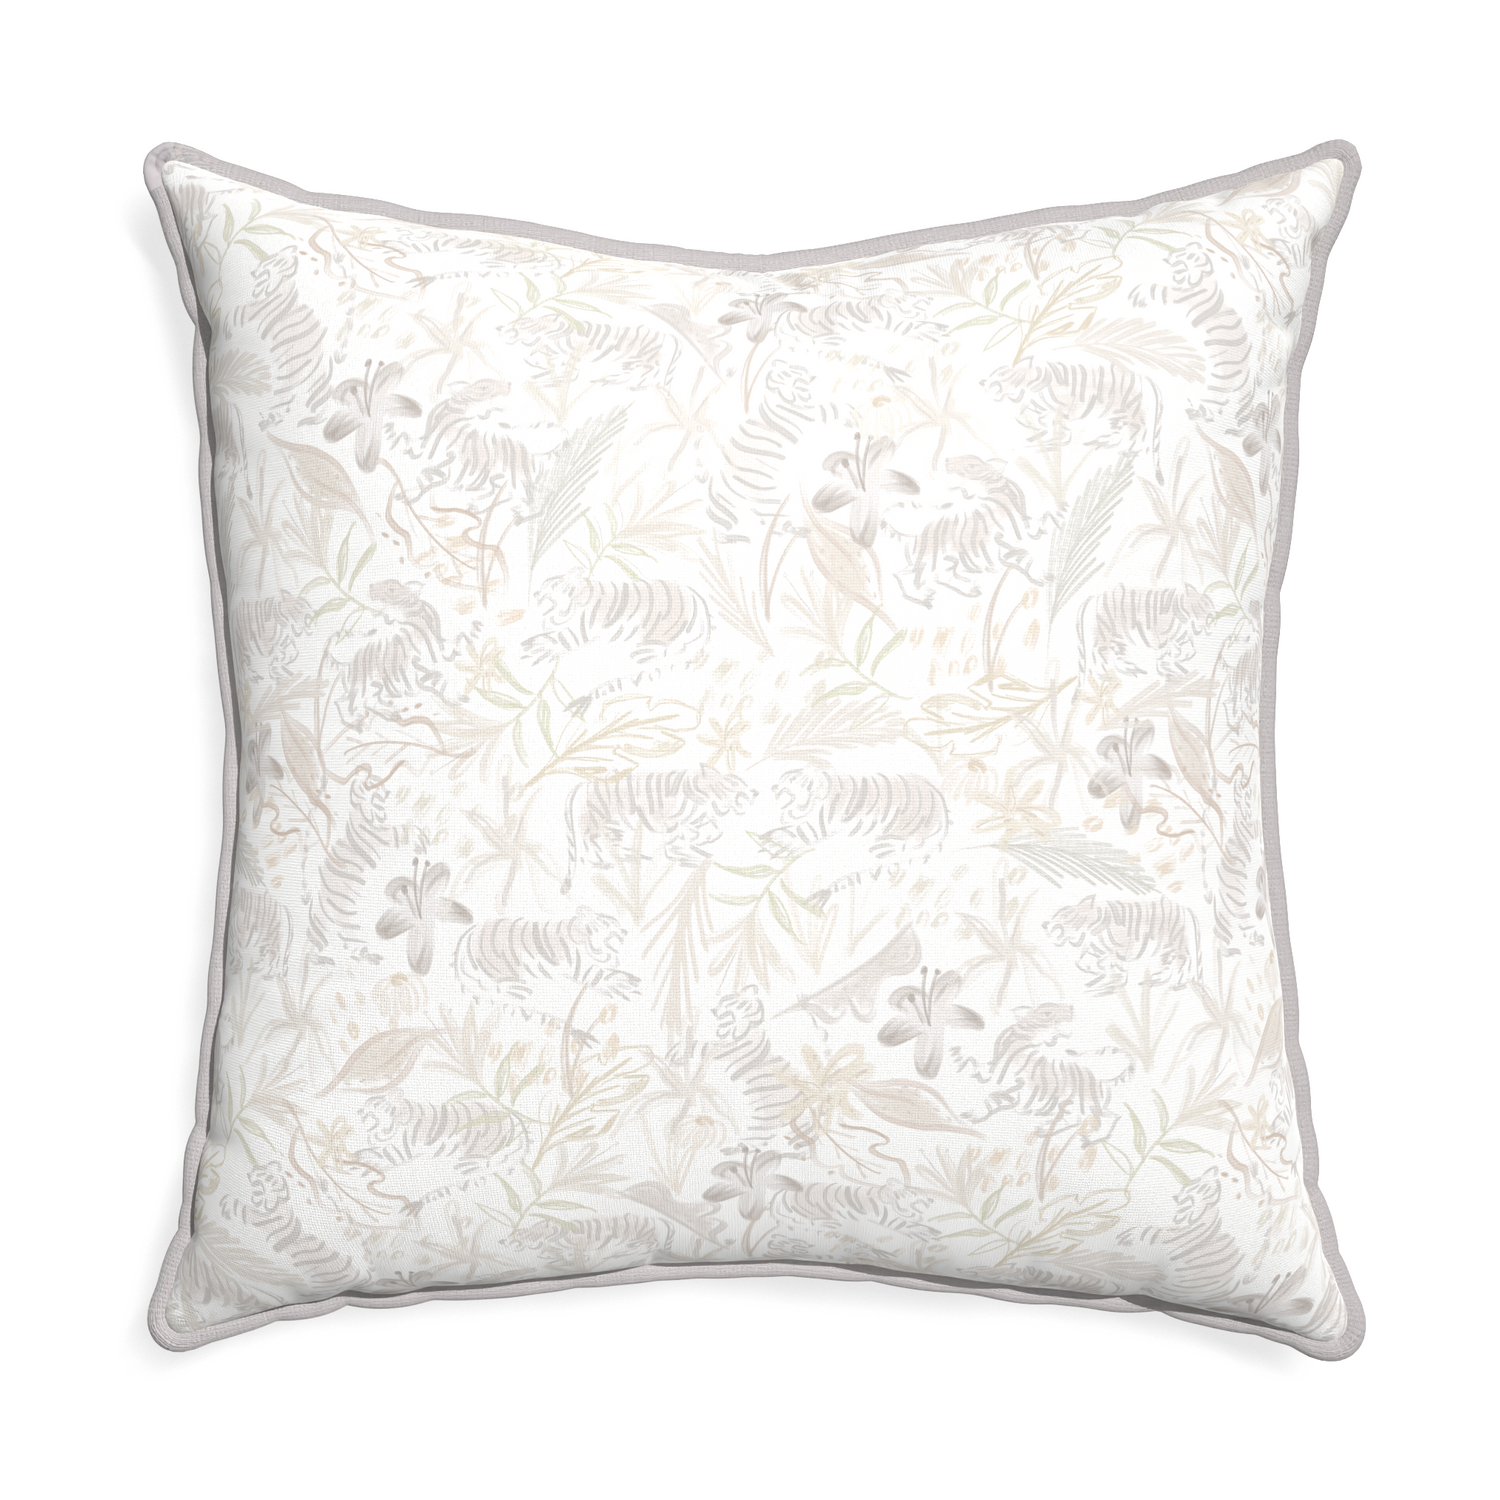 Euro-sham frida sand custom pillow with pebble piping on white background